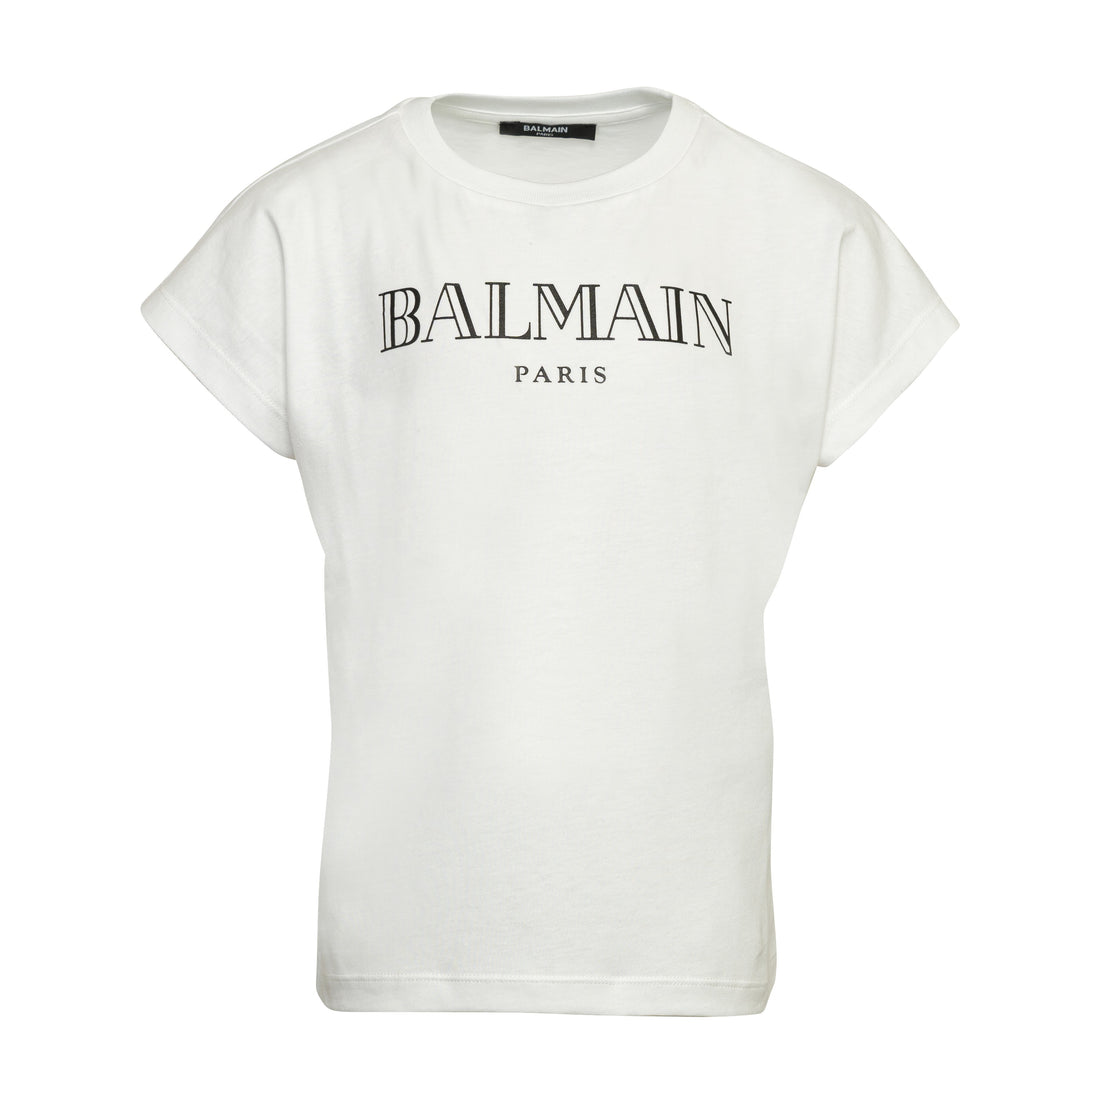 Balmain Cotton T-Shirt/Top | Schools Out